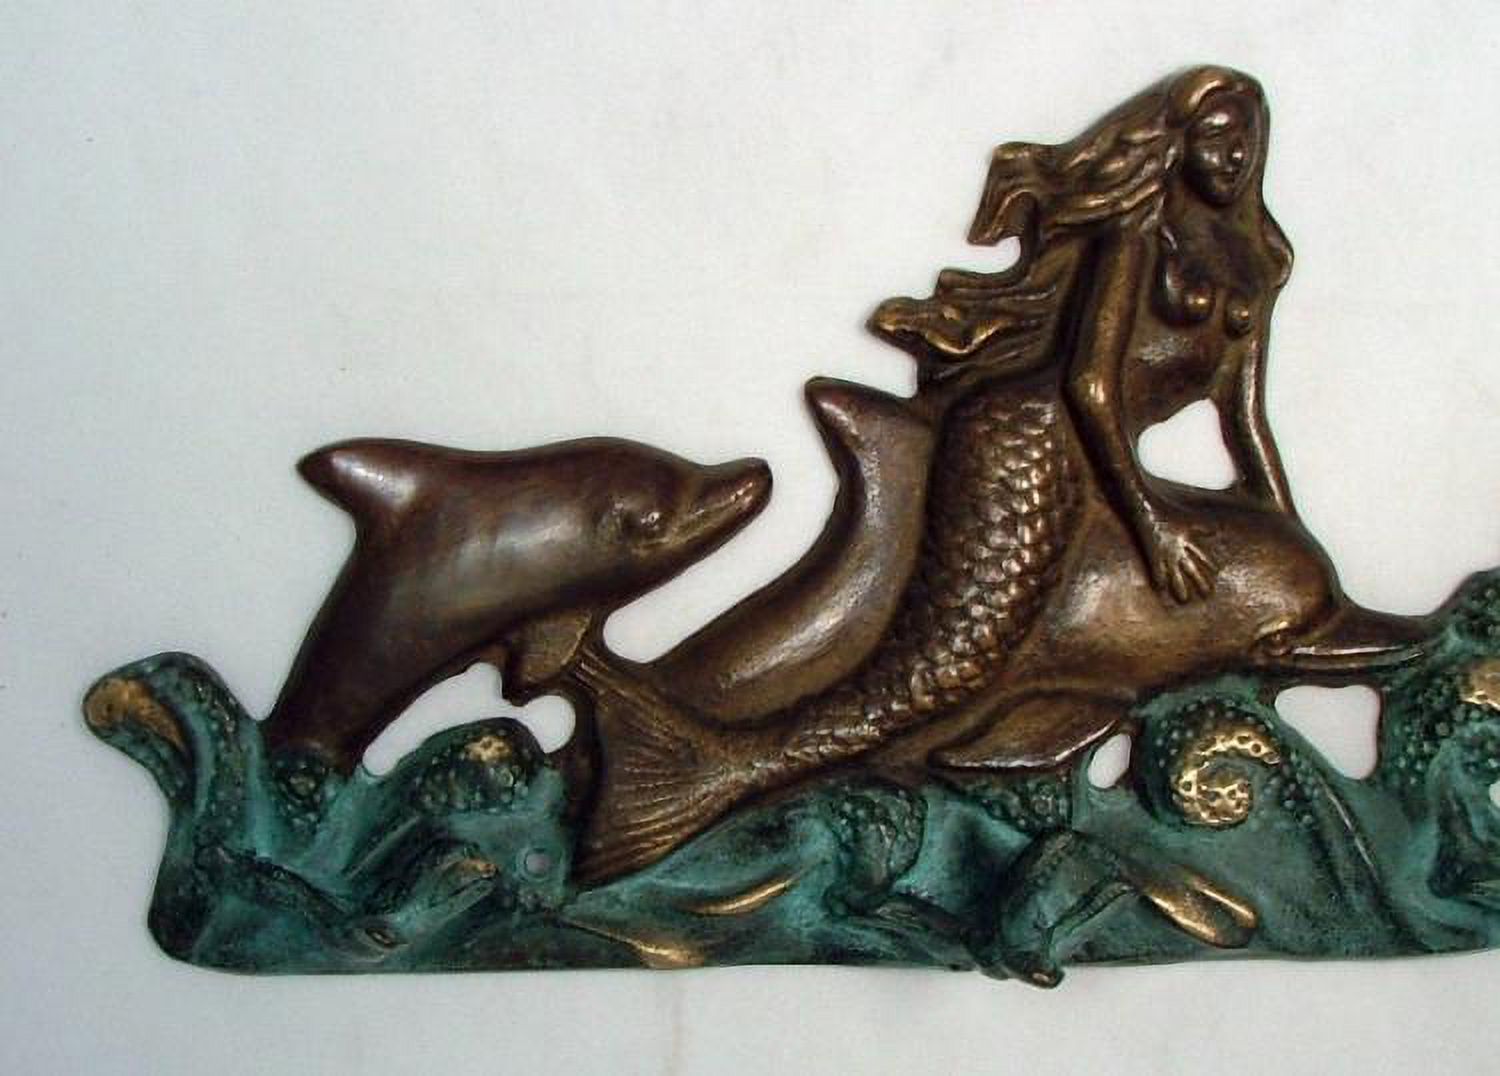 Mermaid & Dolphin Coat Hook - image 3 of 5